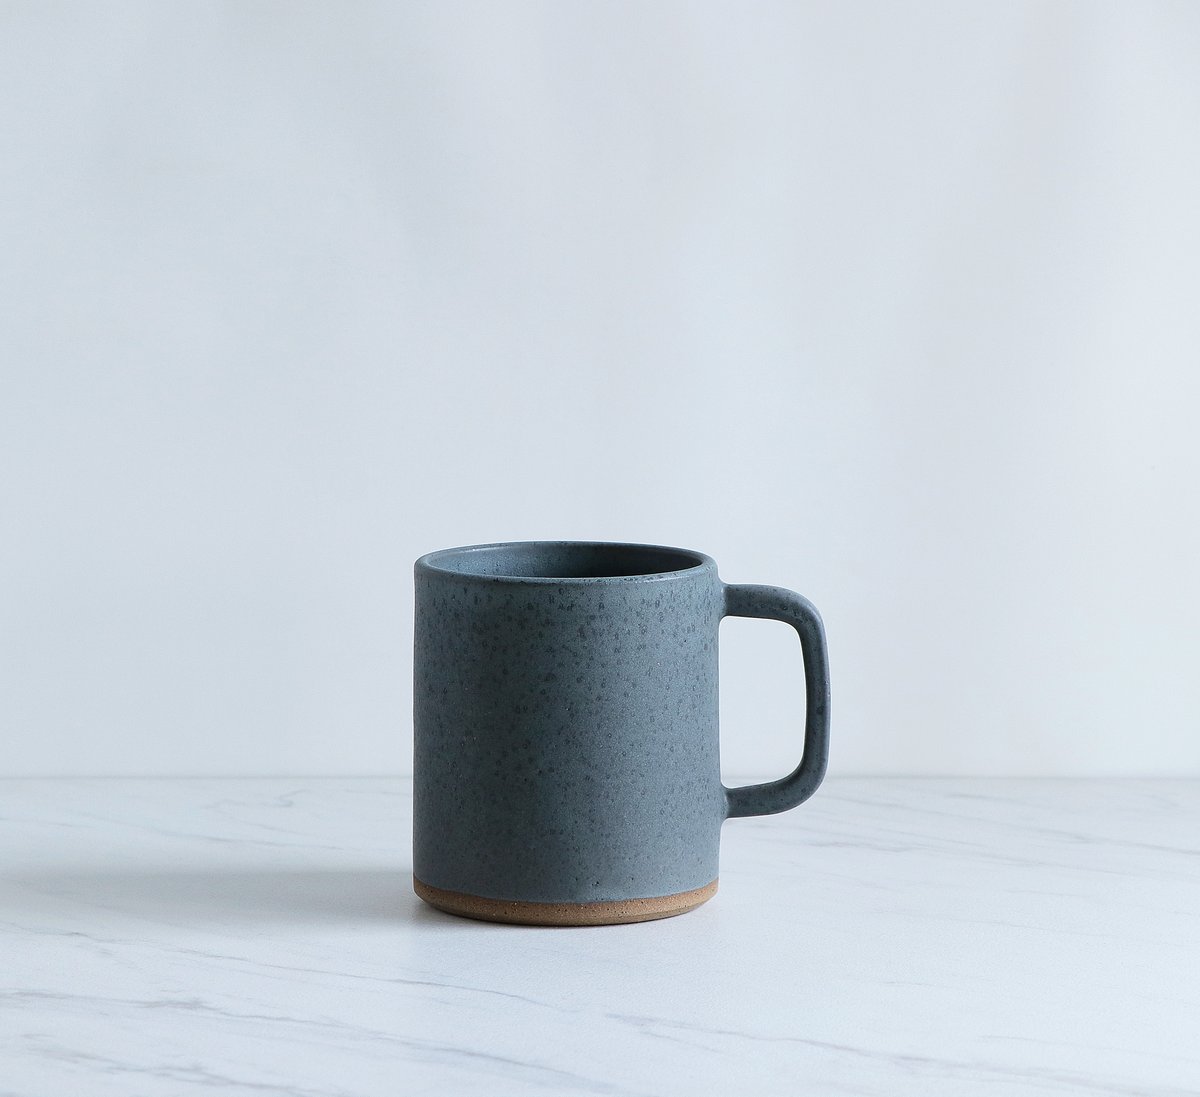 Image of 16 oz mug, glazed in Dark Teal